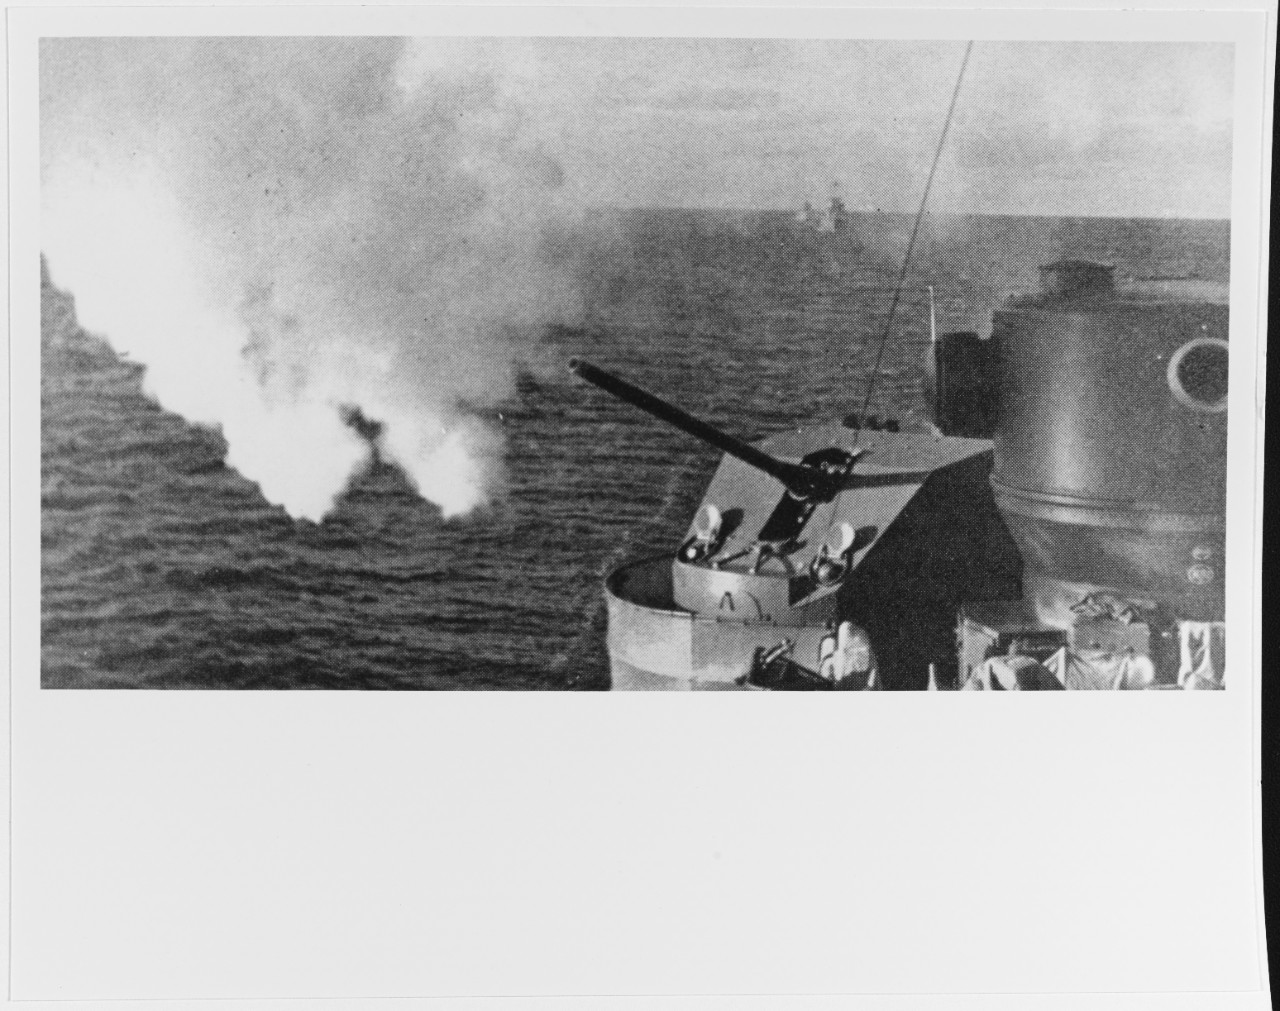 Soviet 3.35-in./52-caliber gun aboard a Soviet warship during the 1950s